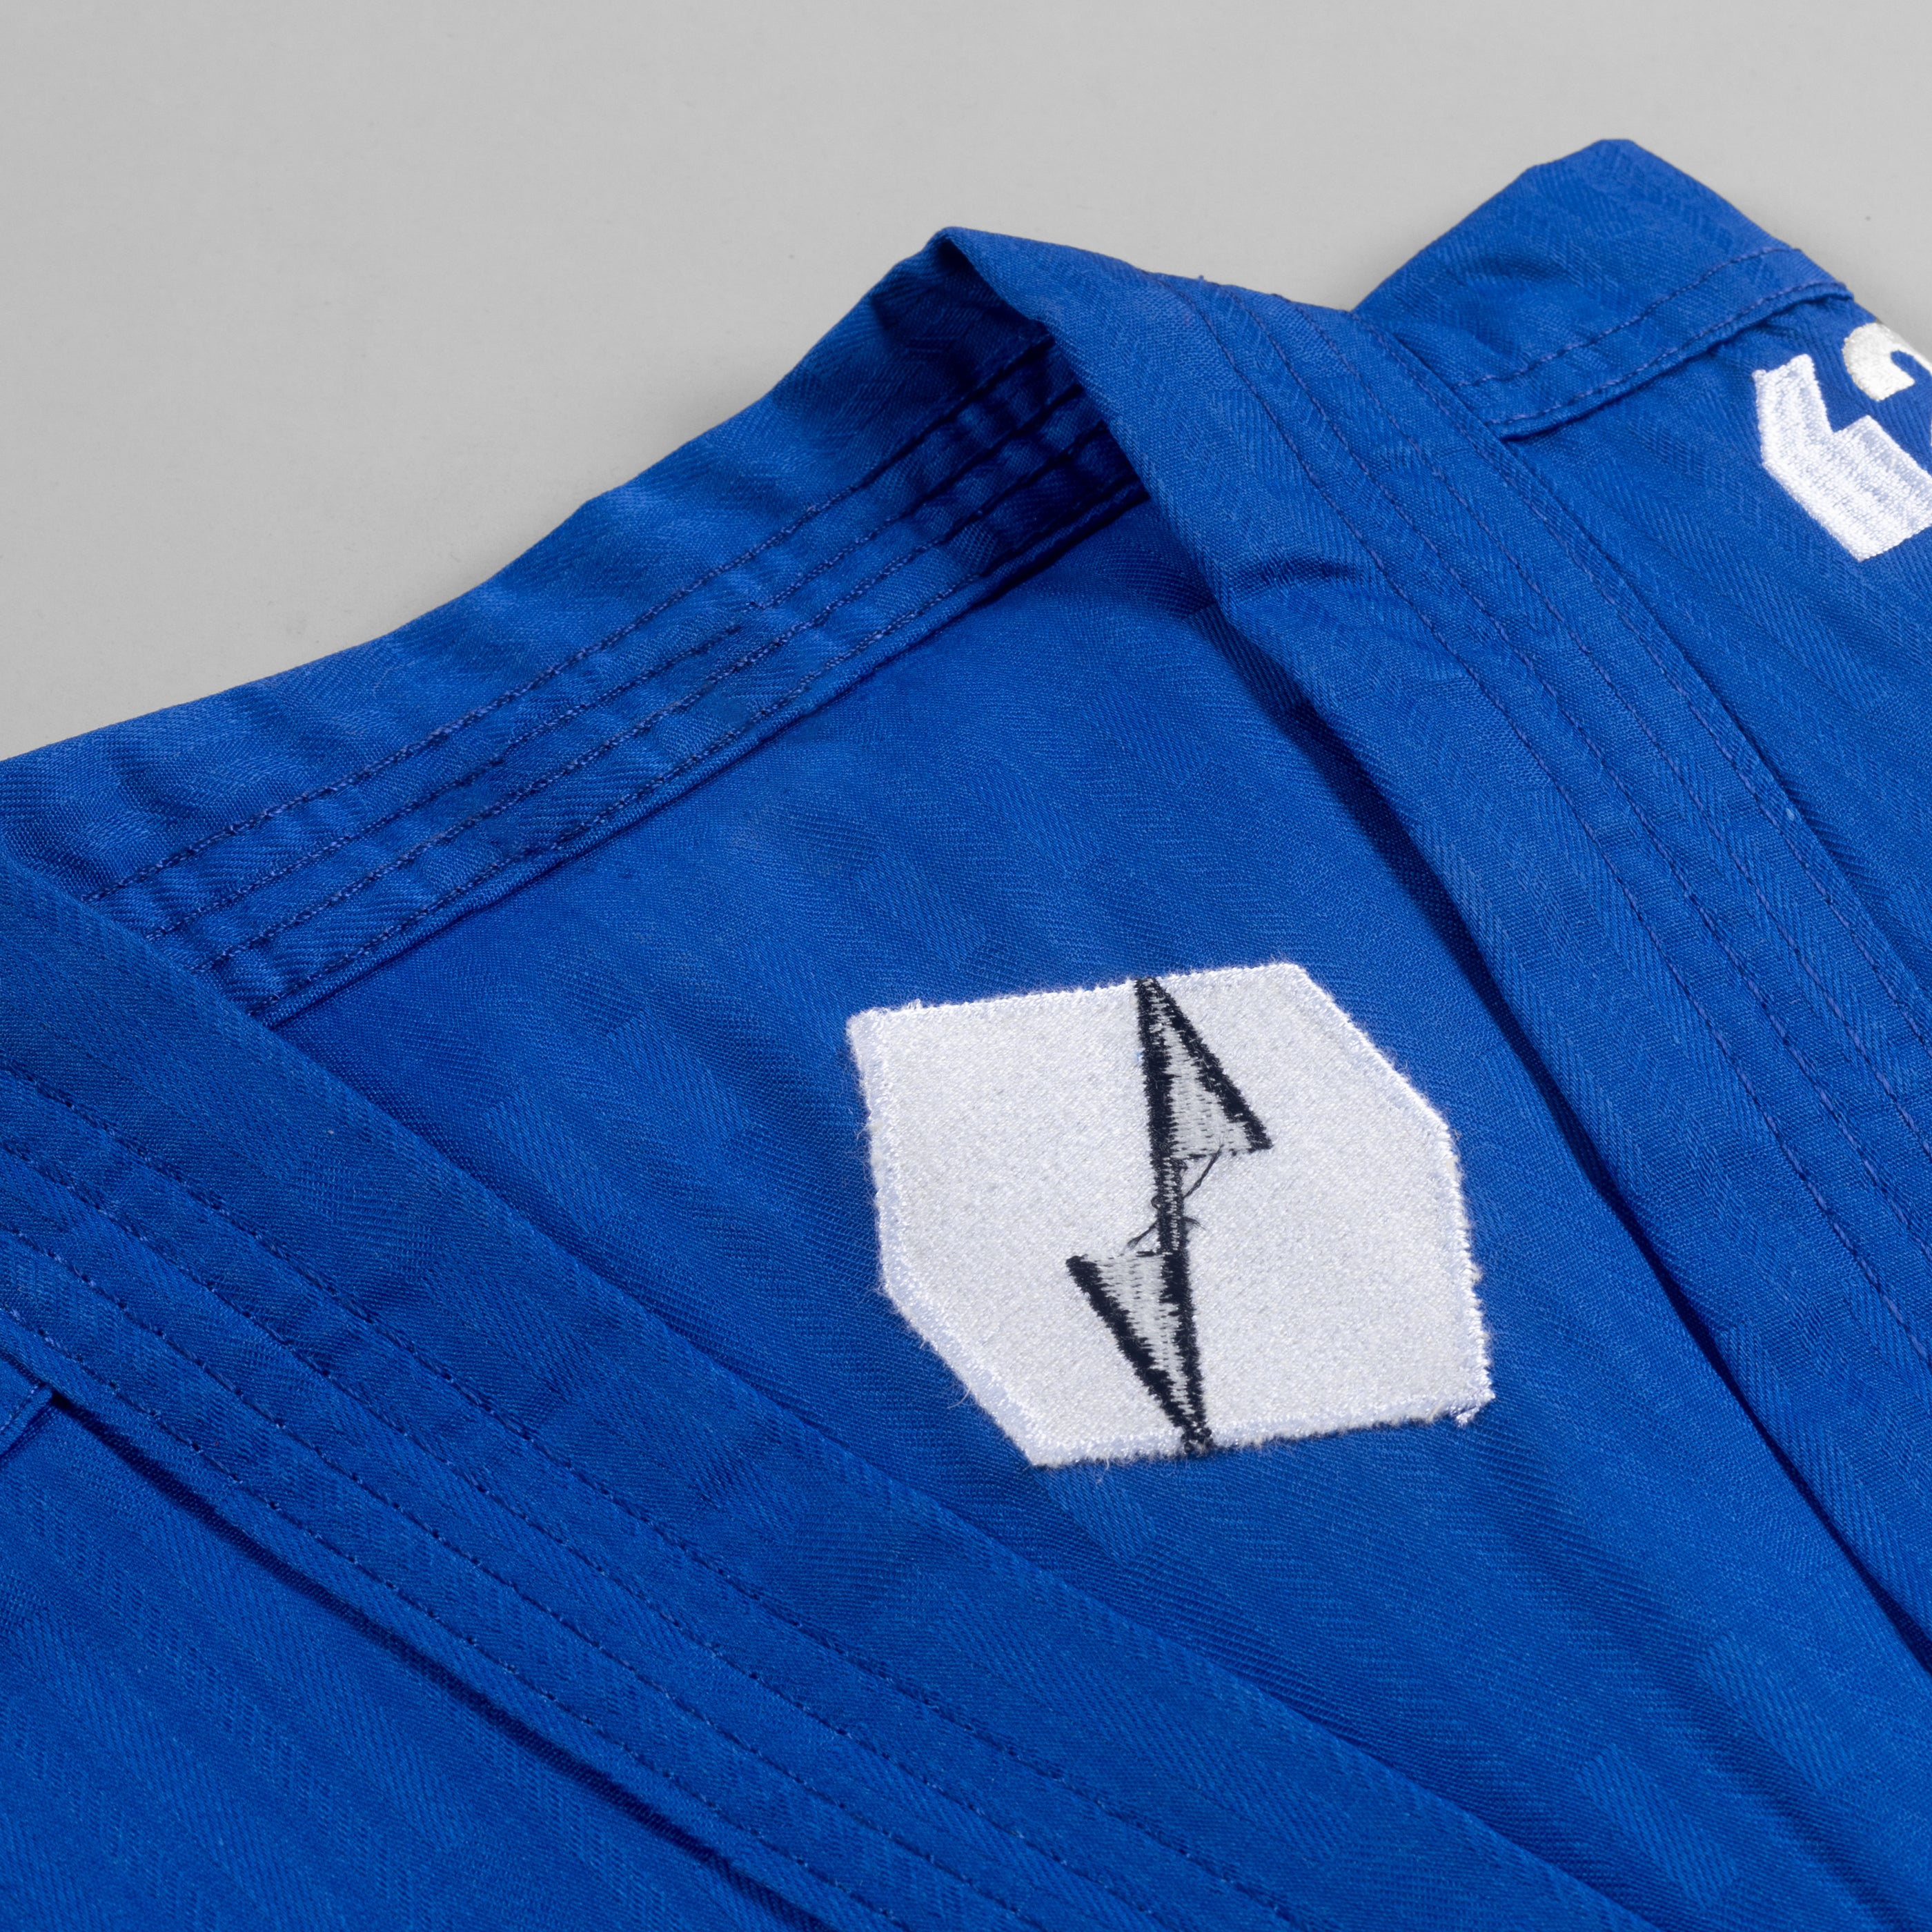 'Vintage' Taekwondo Dobok Uniform - Blue/White 2TUF2TAP